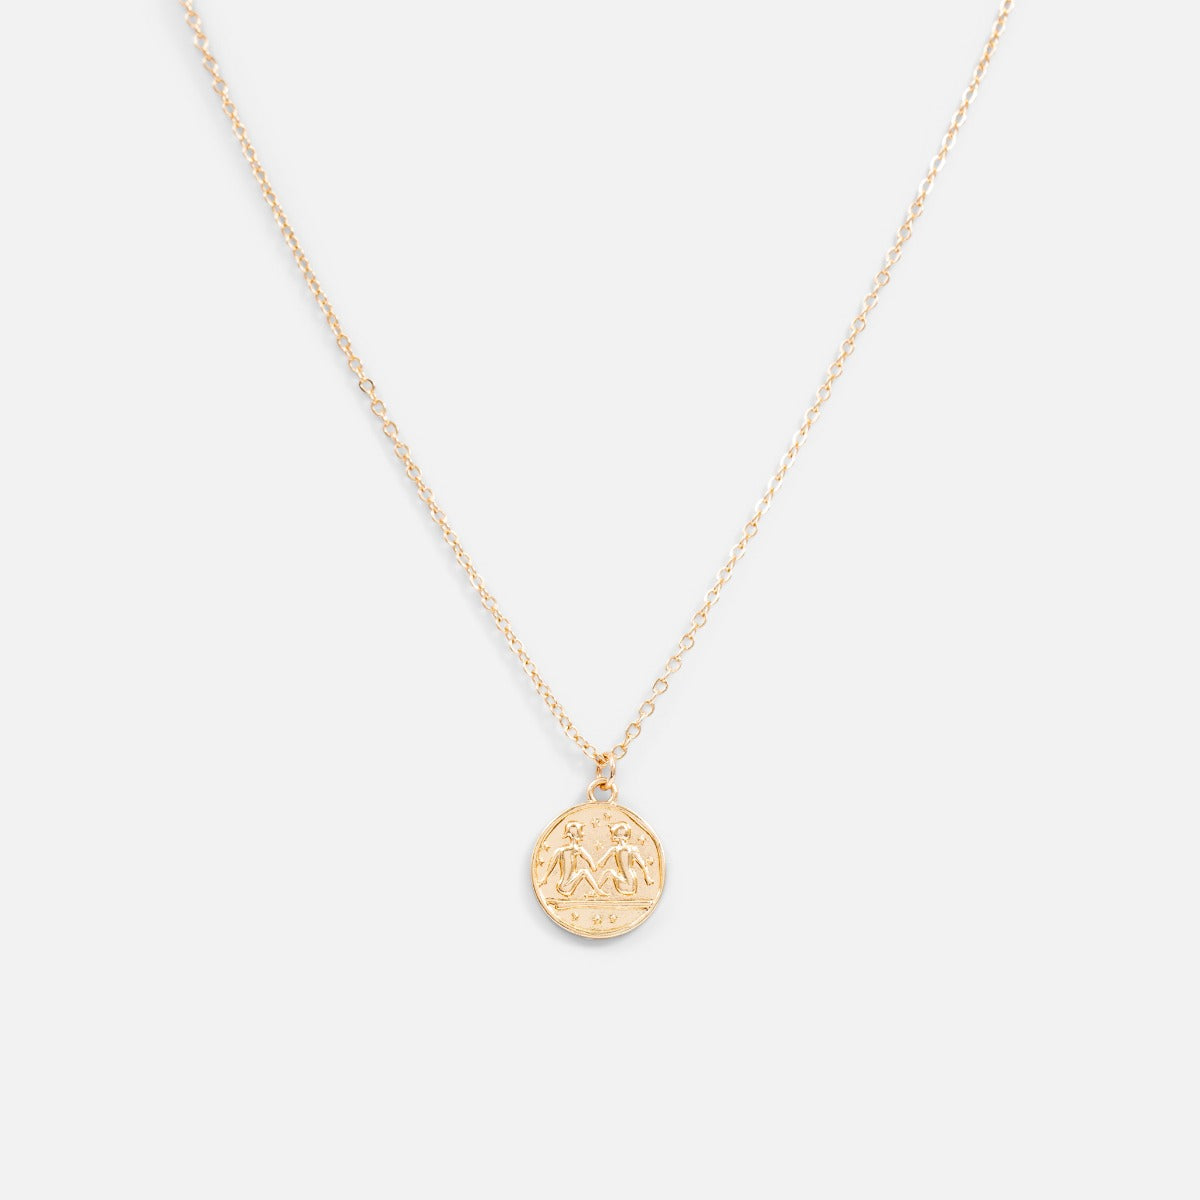 Golden pendant astrological sign "gemini"